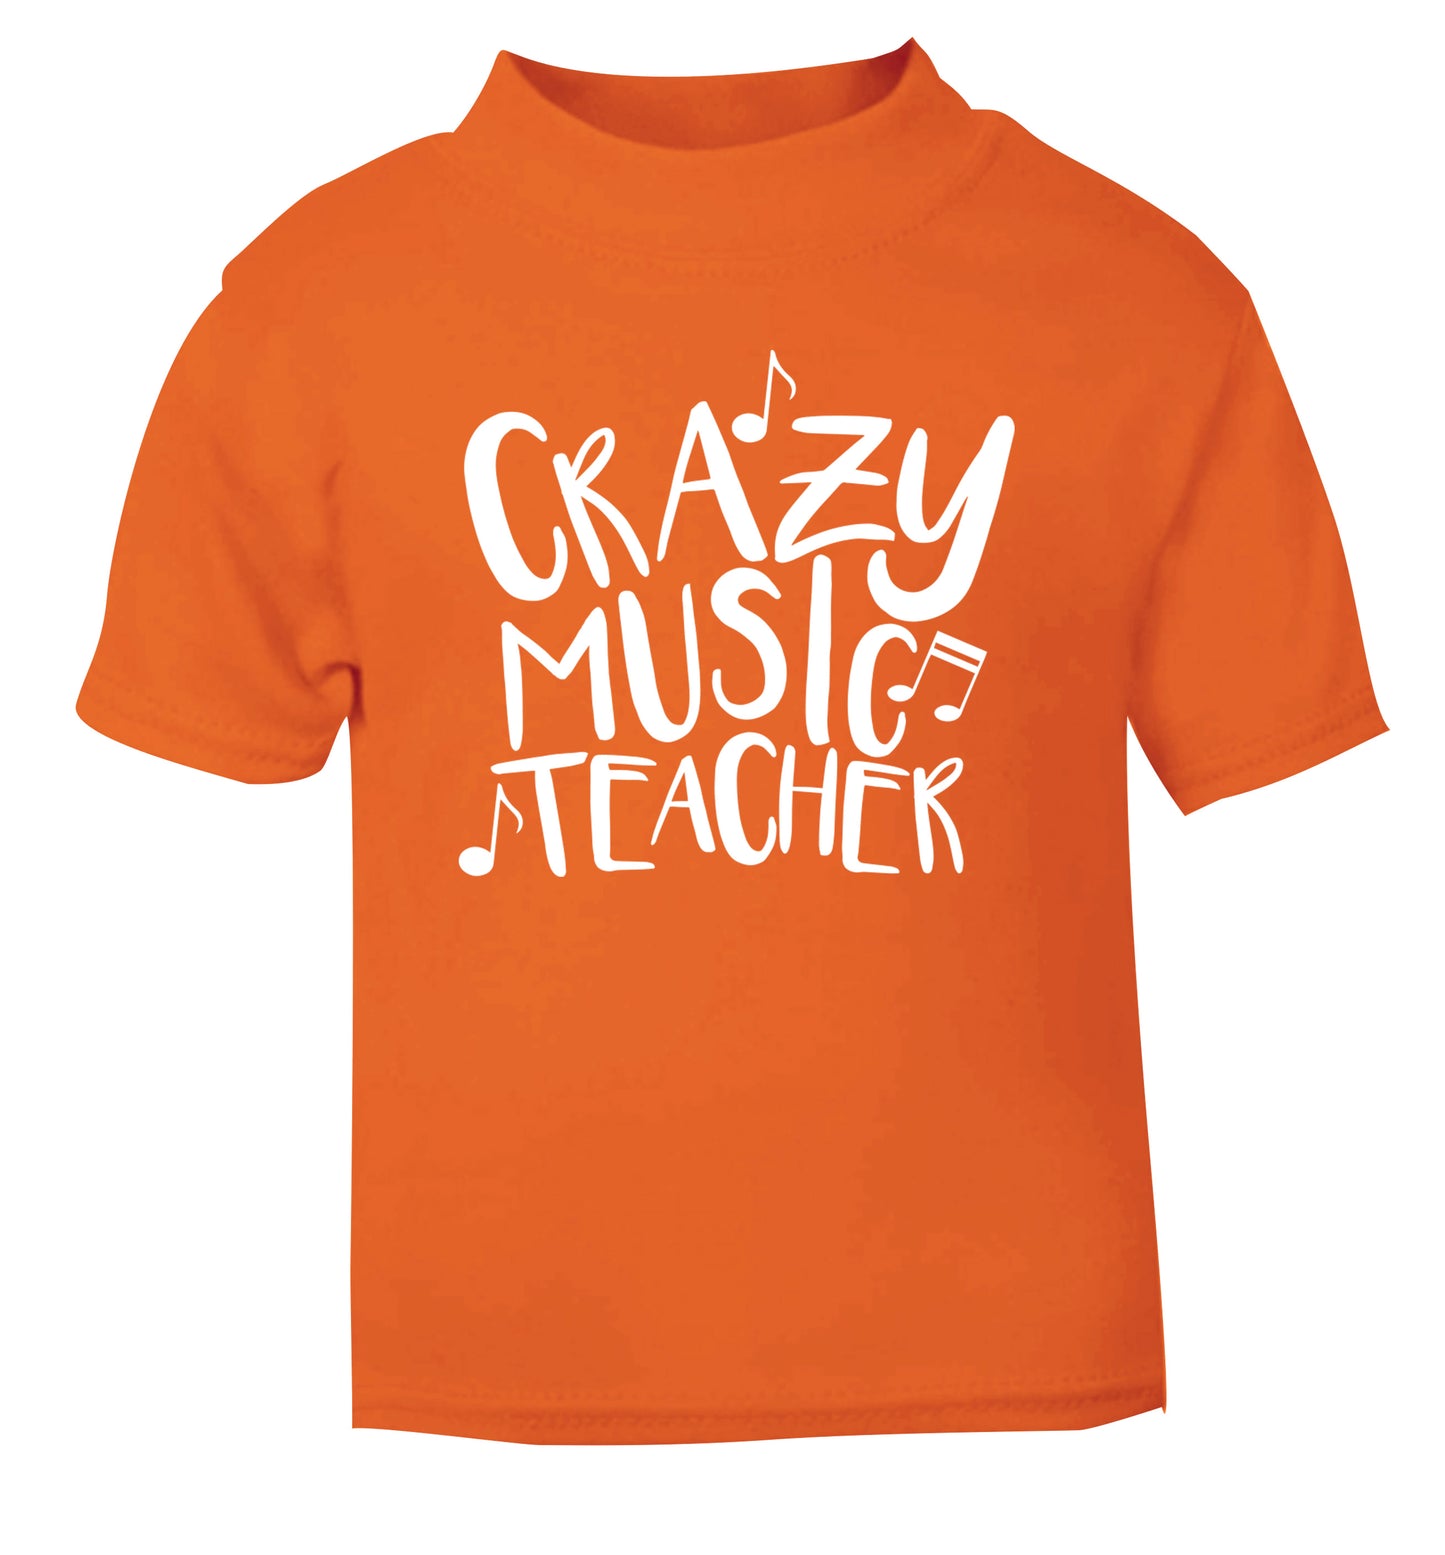 Crazy music teacher orange Baby Toddler Tshirt 2 Years